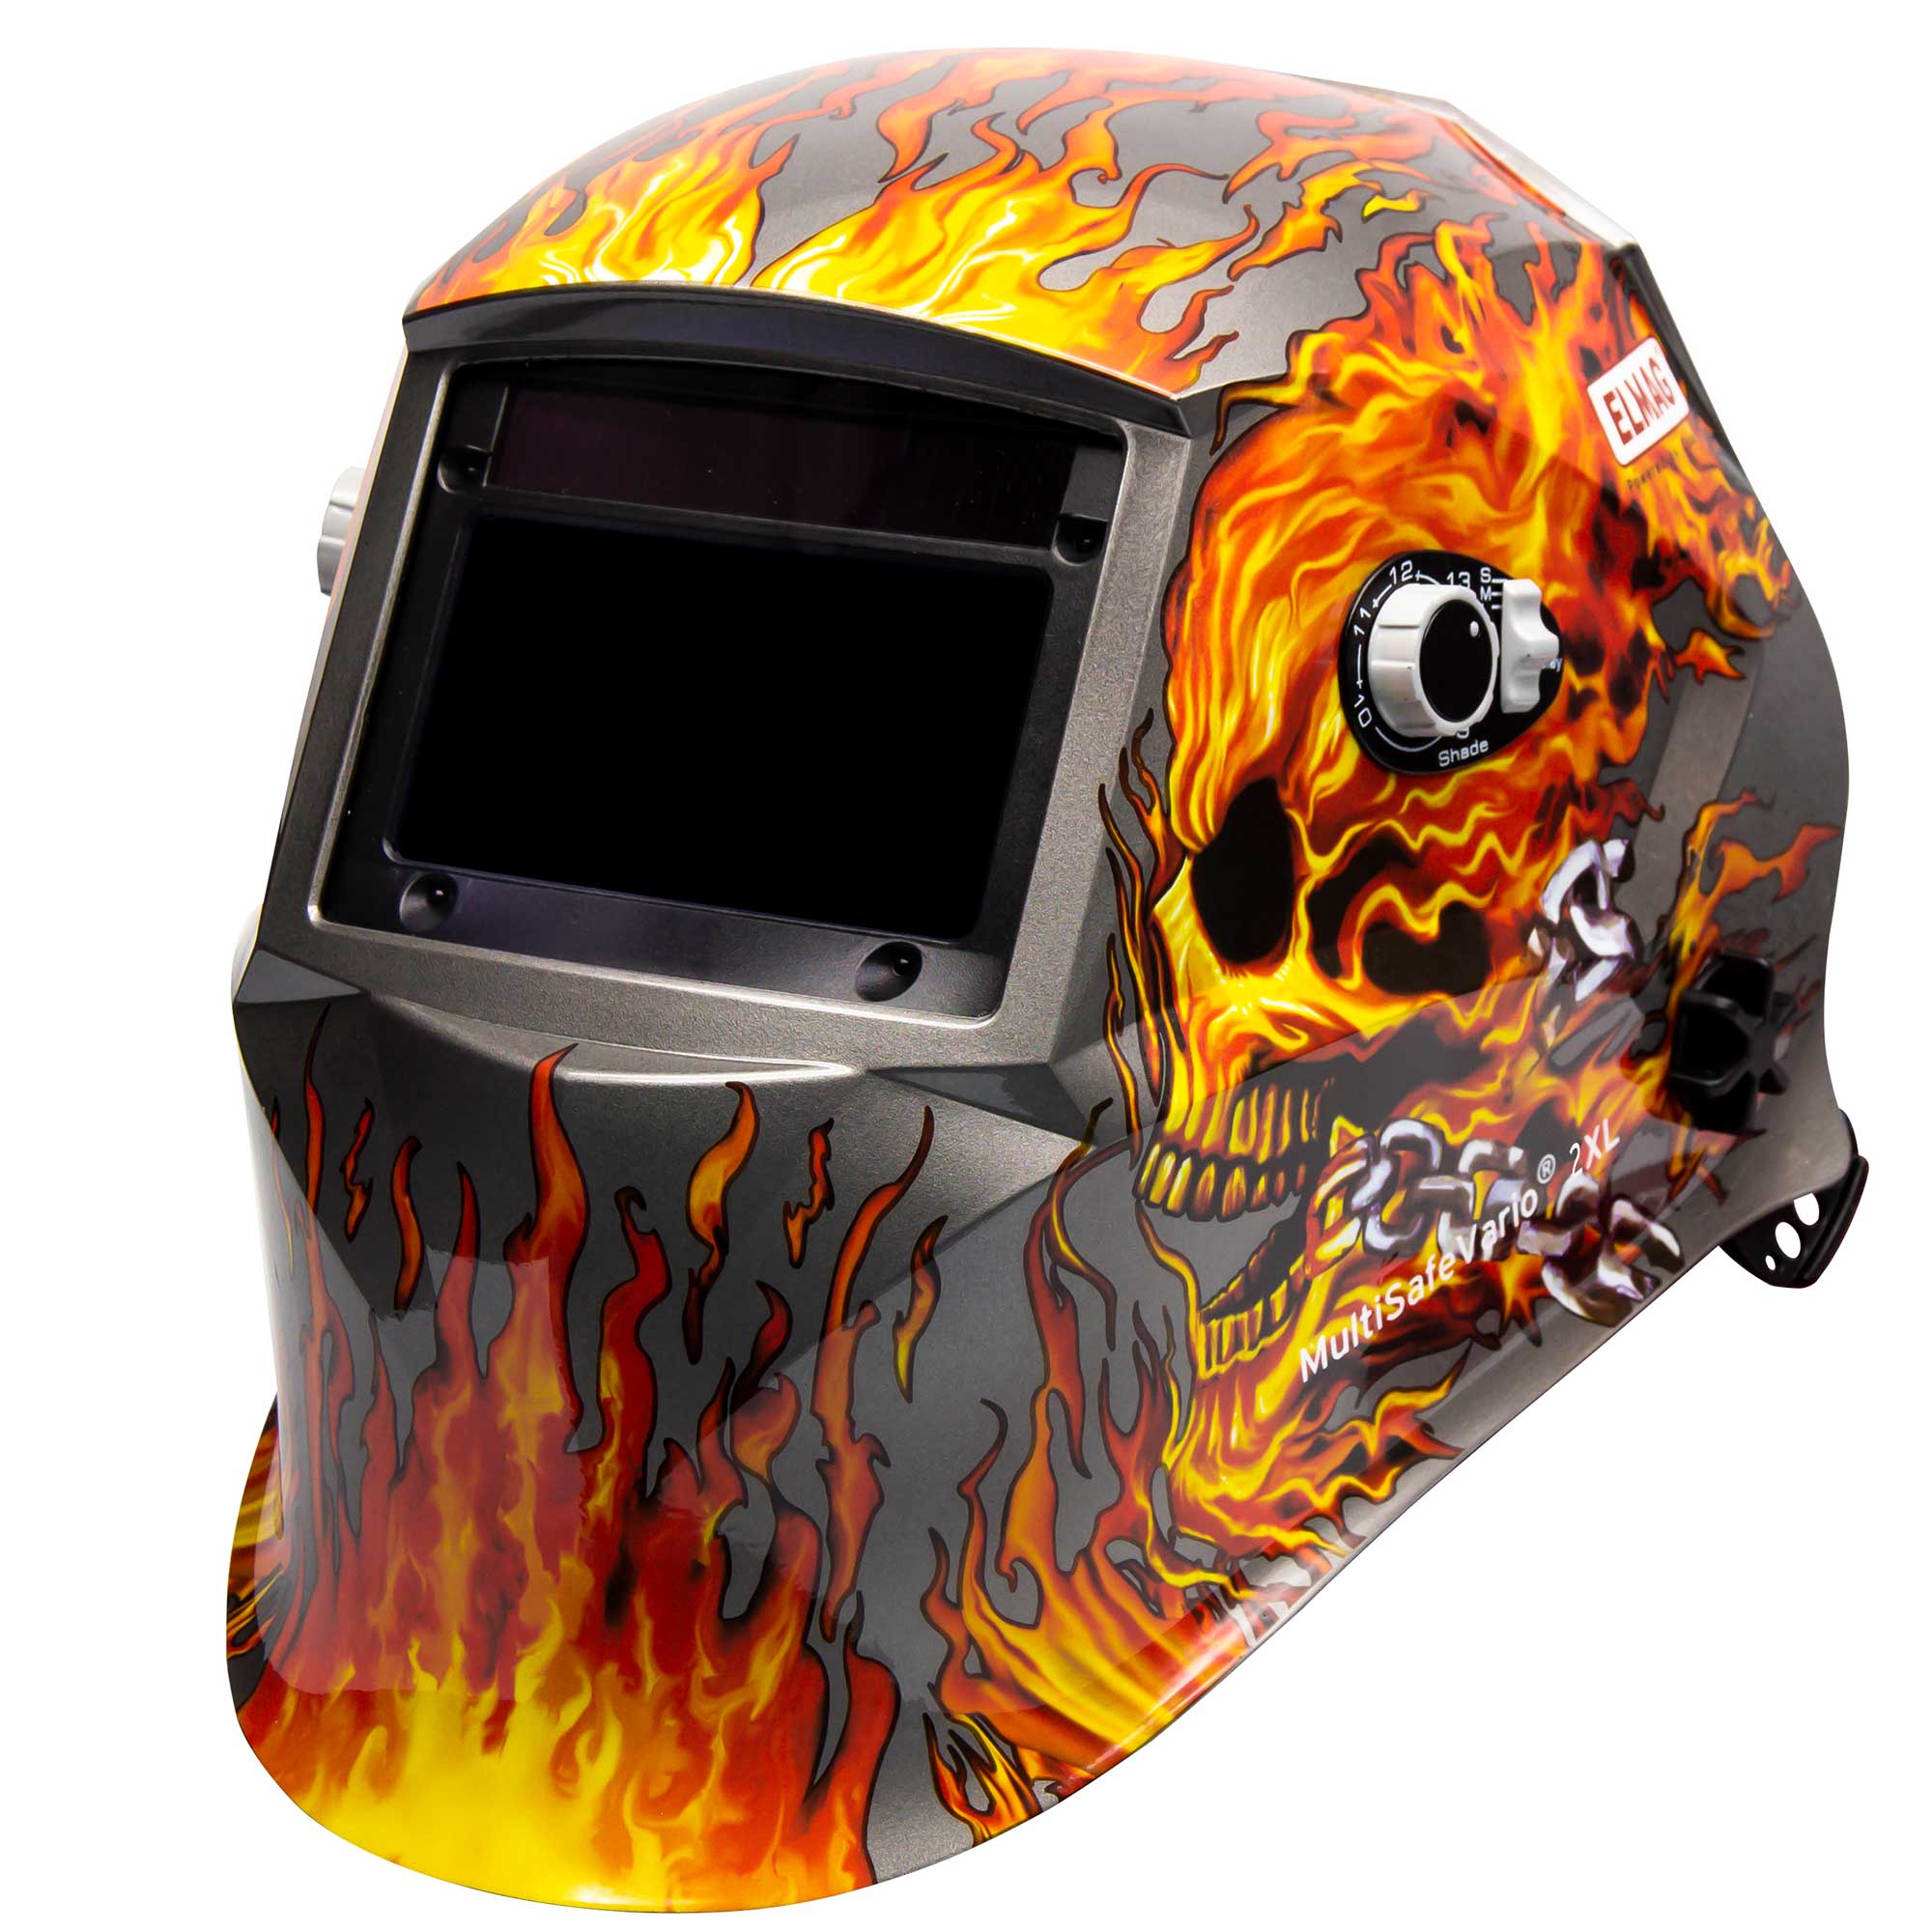 Elmag casco per saldatura autoscurante FLAME